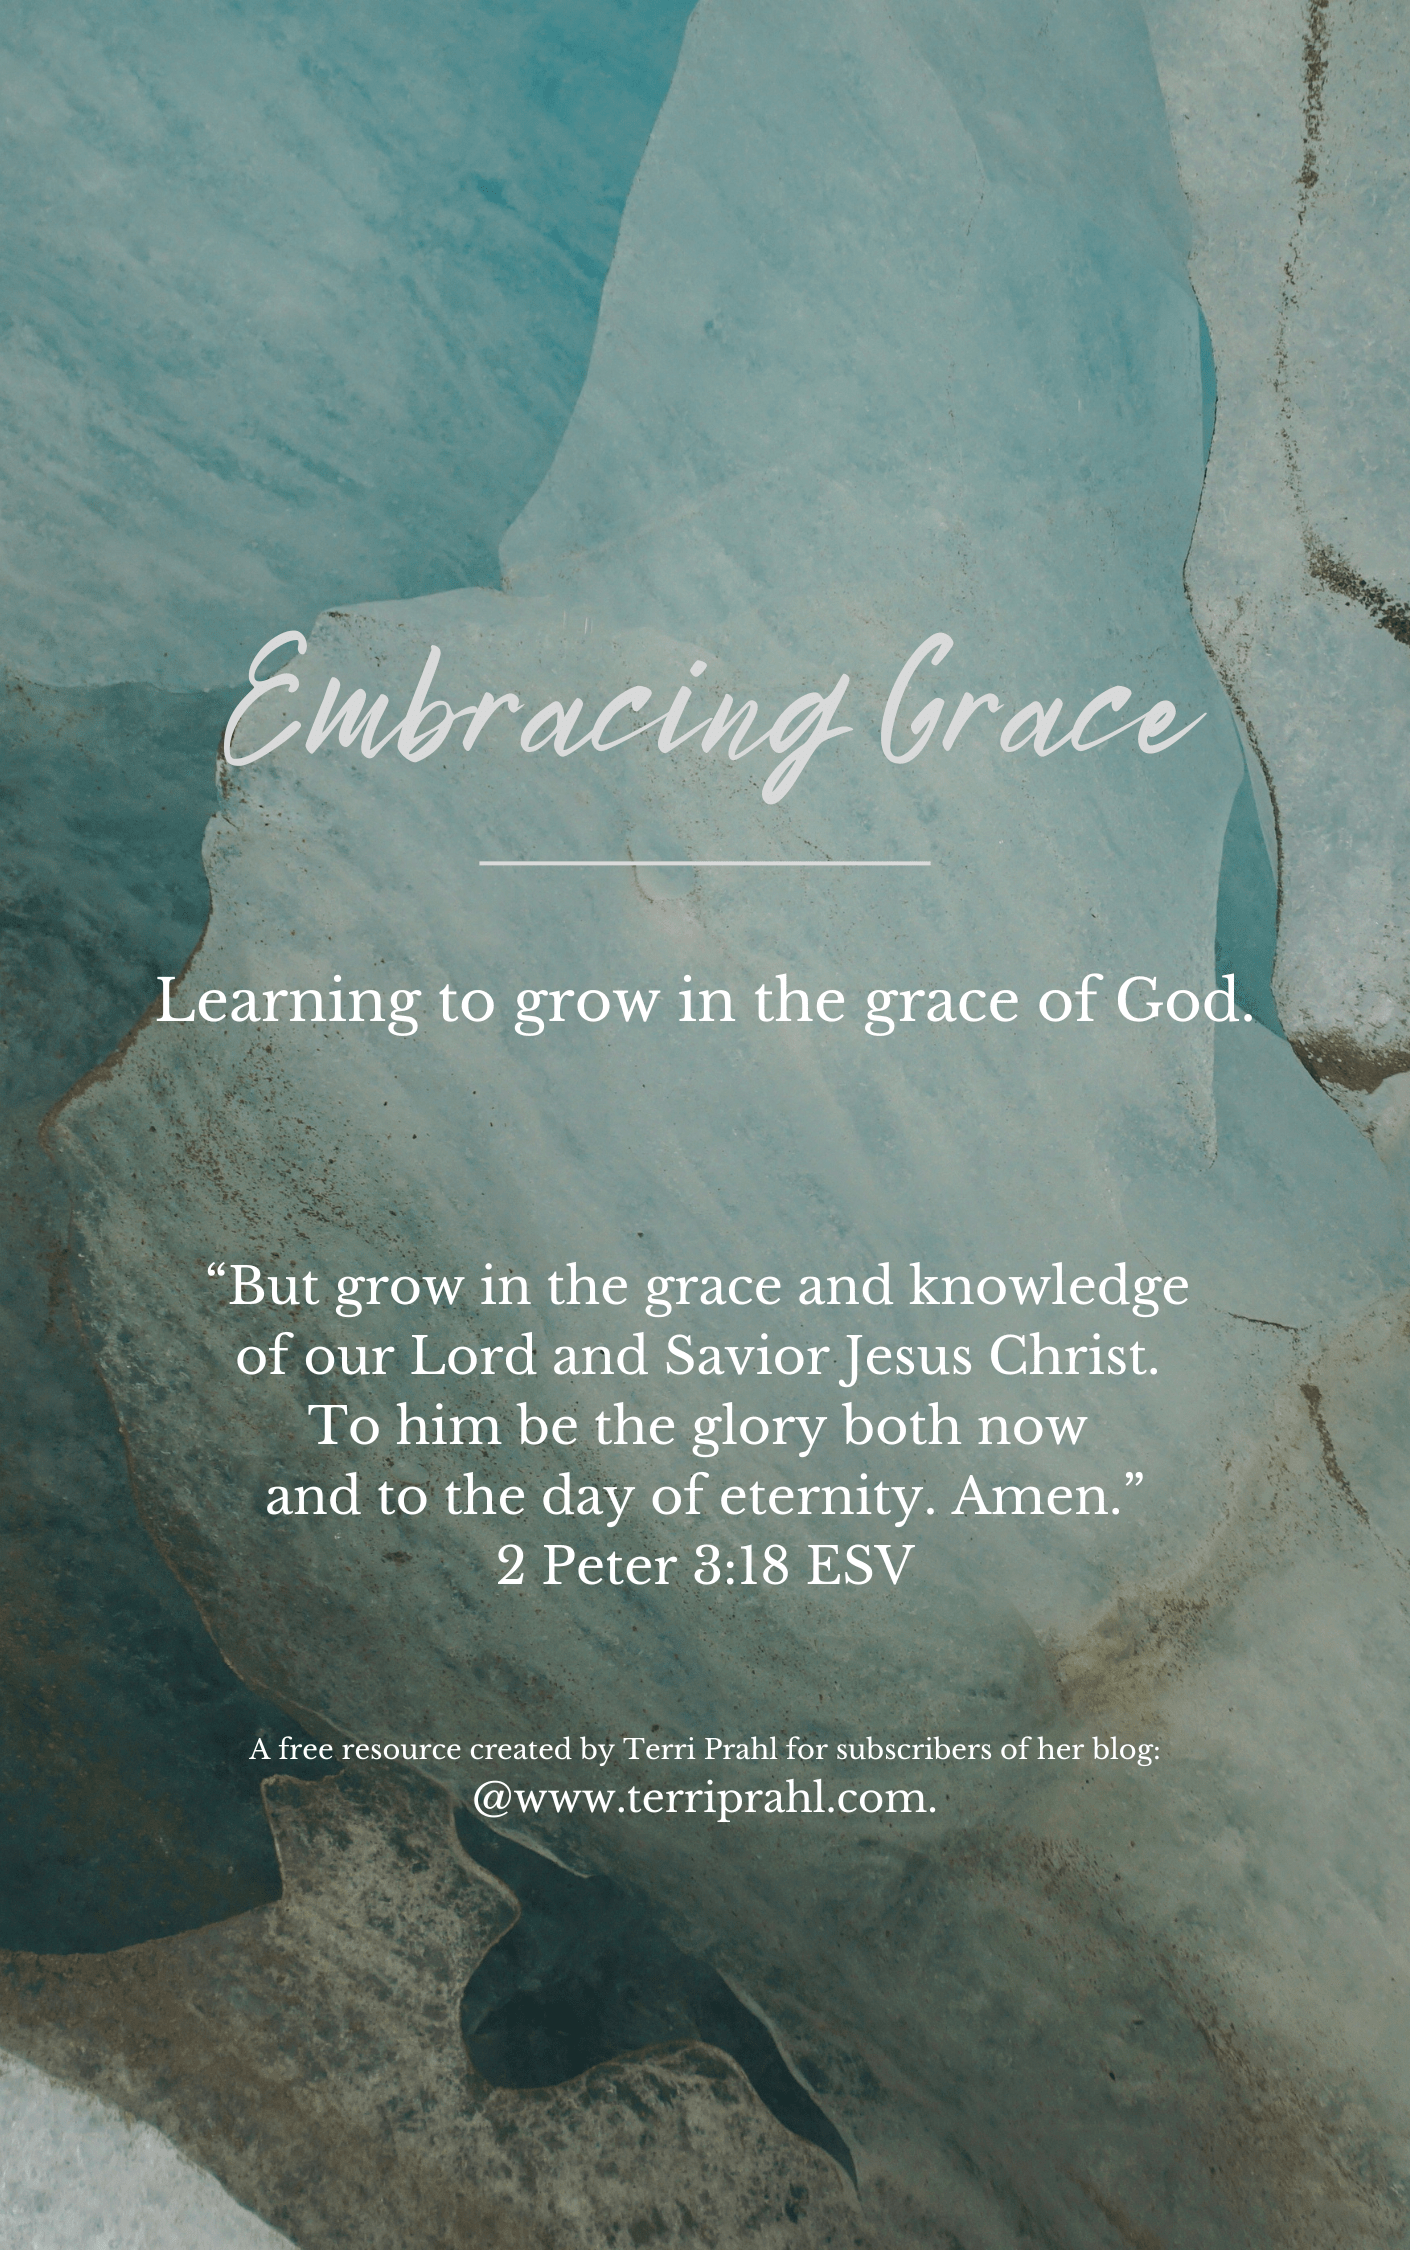 Embracing-Grace